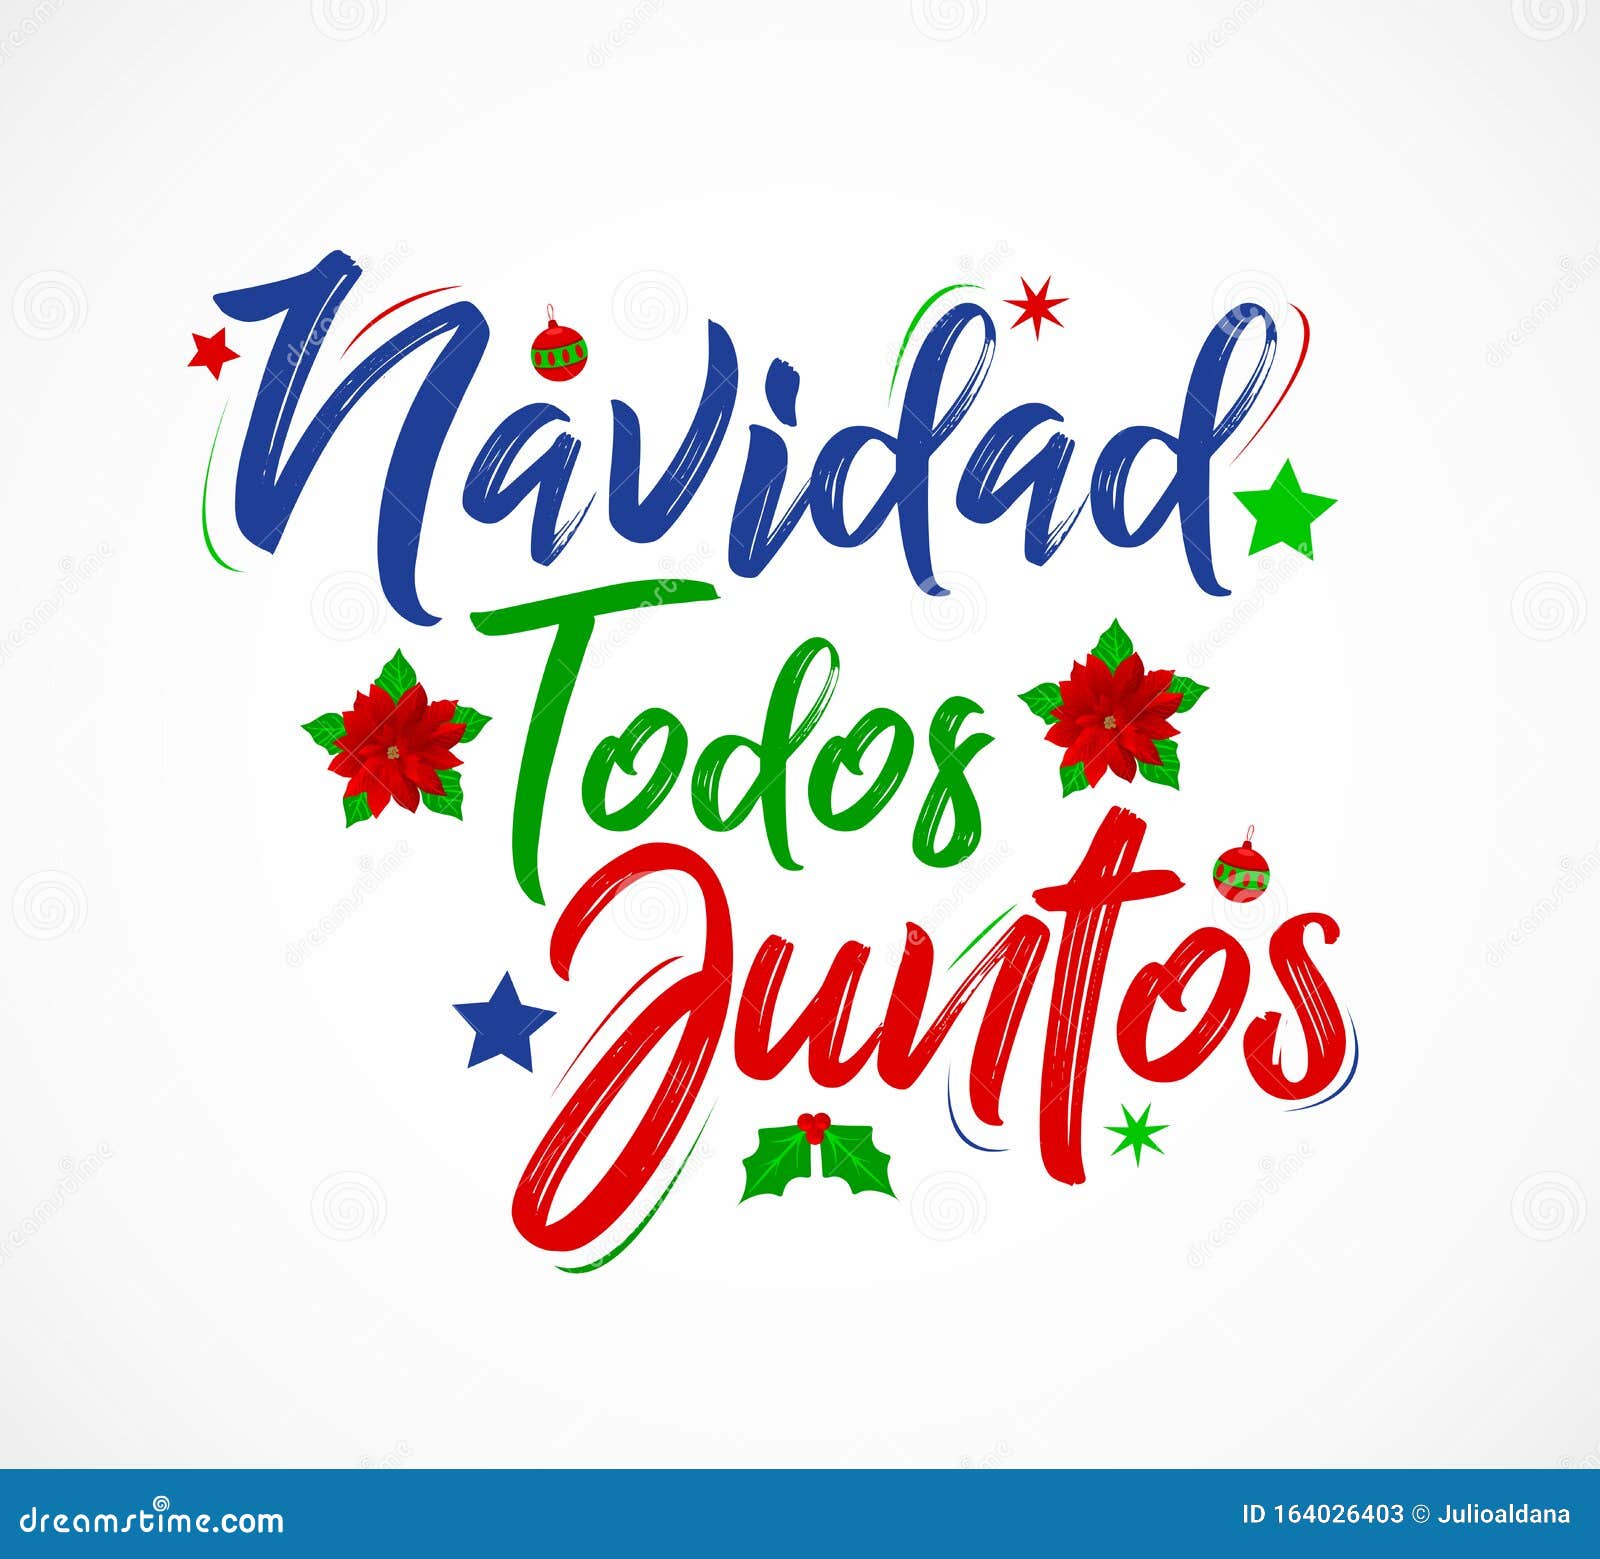 navidad todos juntos, christmas all together, spanish text lettering 